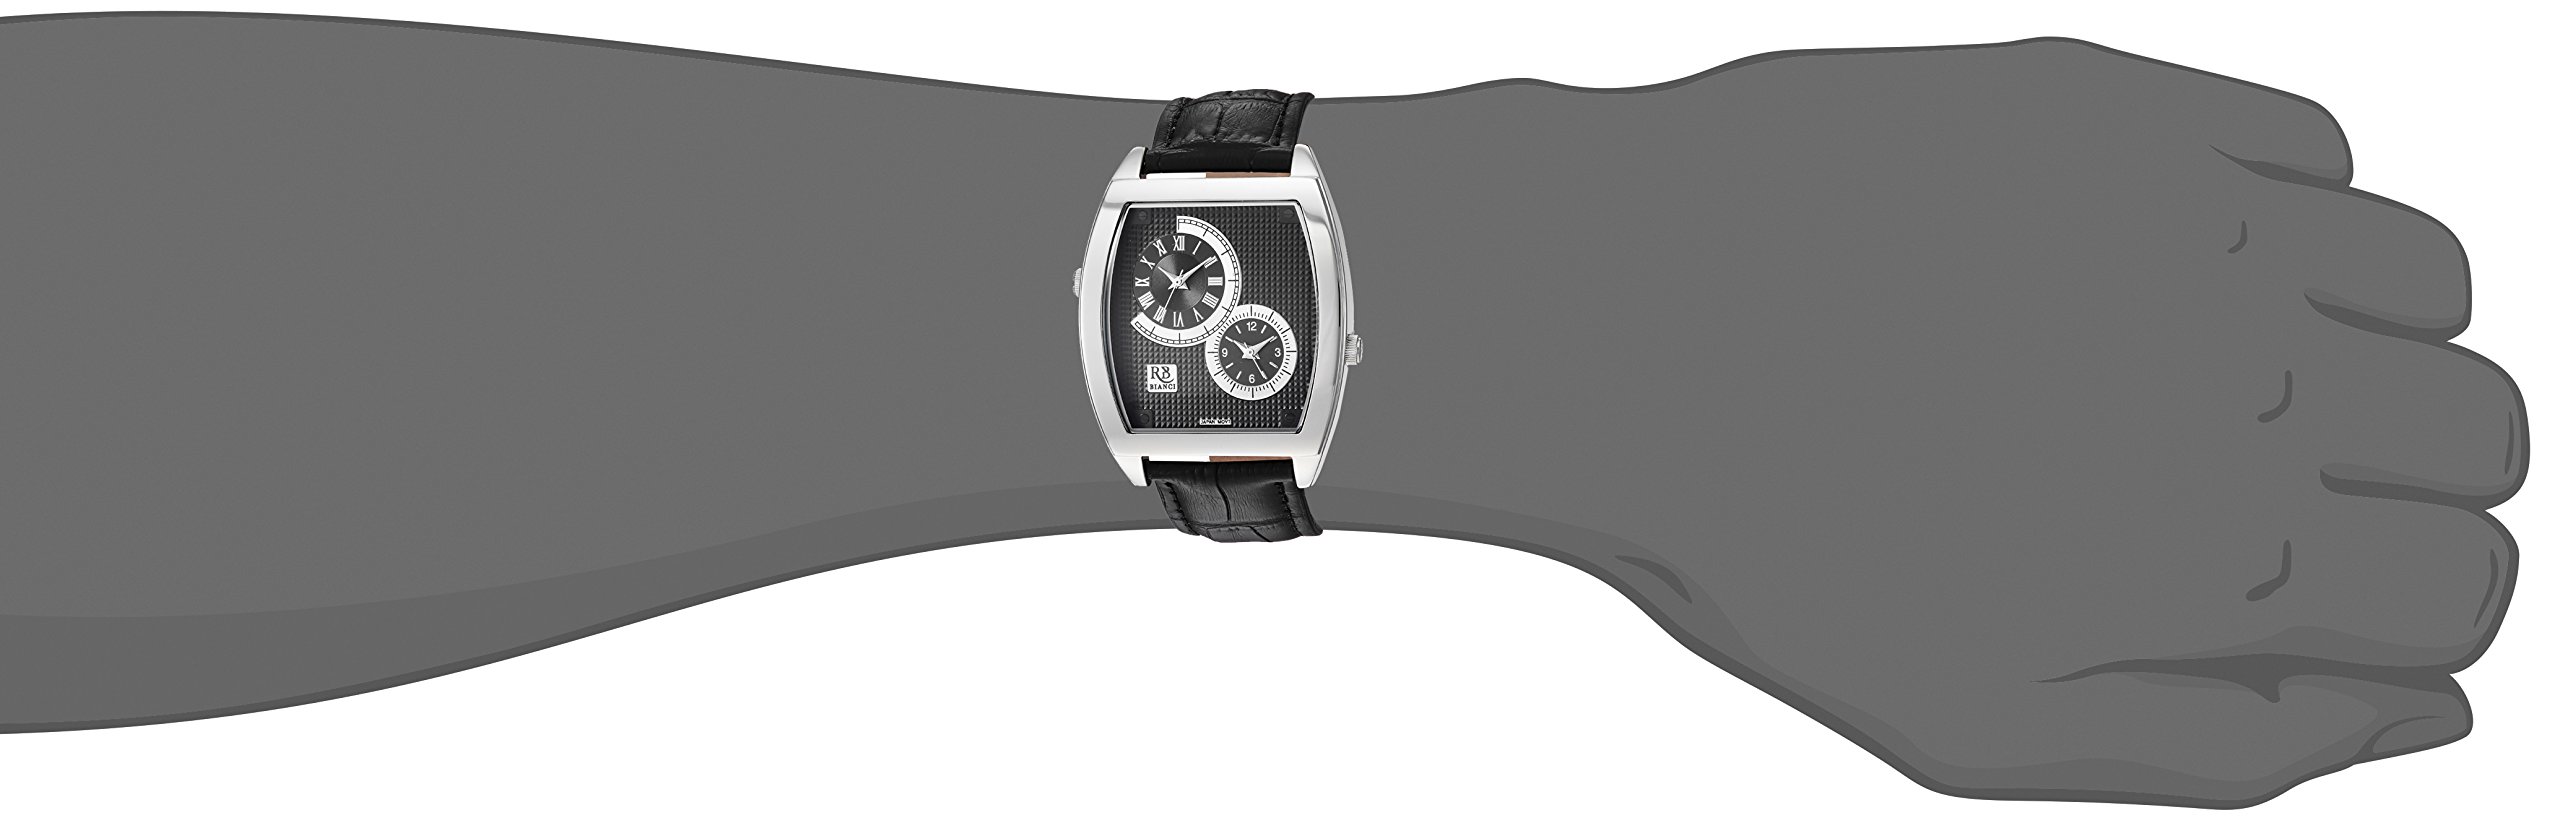 ROBERTO BIANCI WATCHES Men's RB0741 Benzo Analog Display Quartz Black Watch